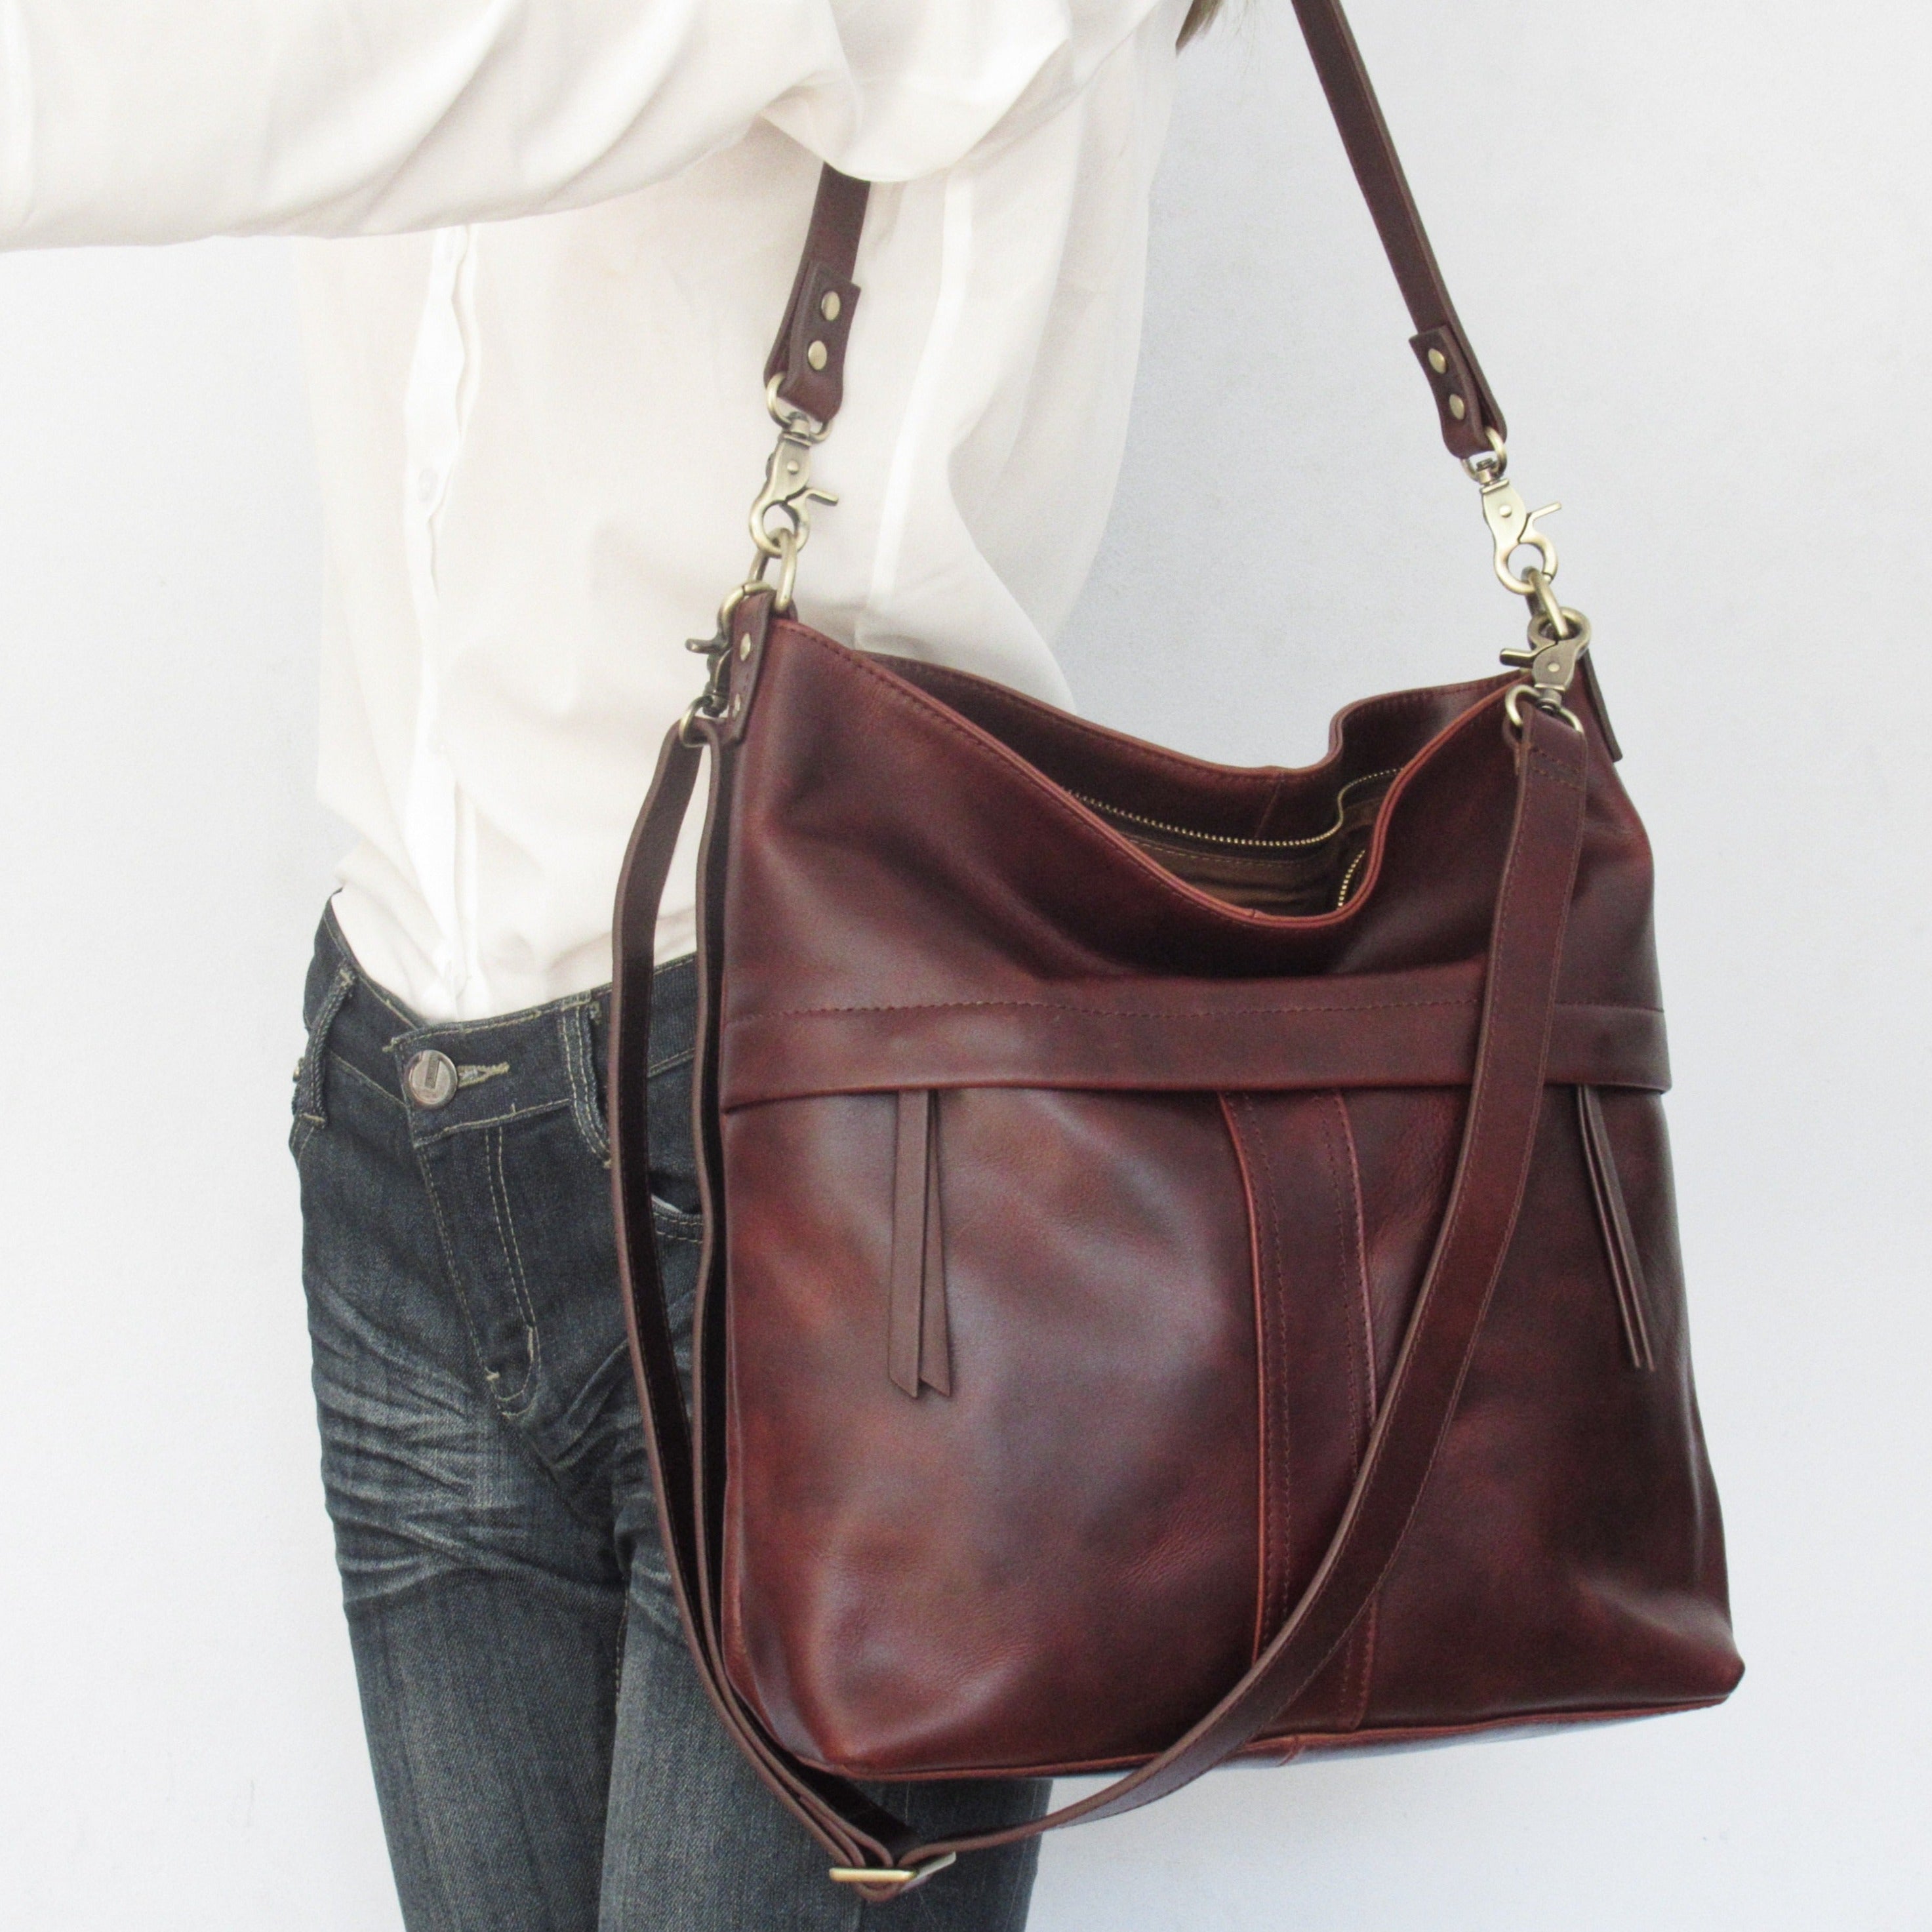 LAPIS O LUPO Women's Handbag and Sling Bag Combo (Beige) (Set of 2) :  Amazon.in: Fashion